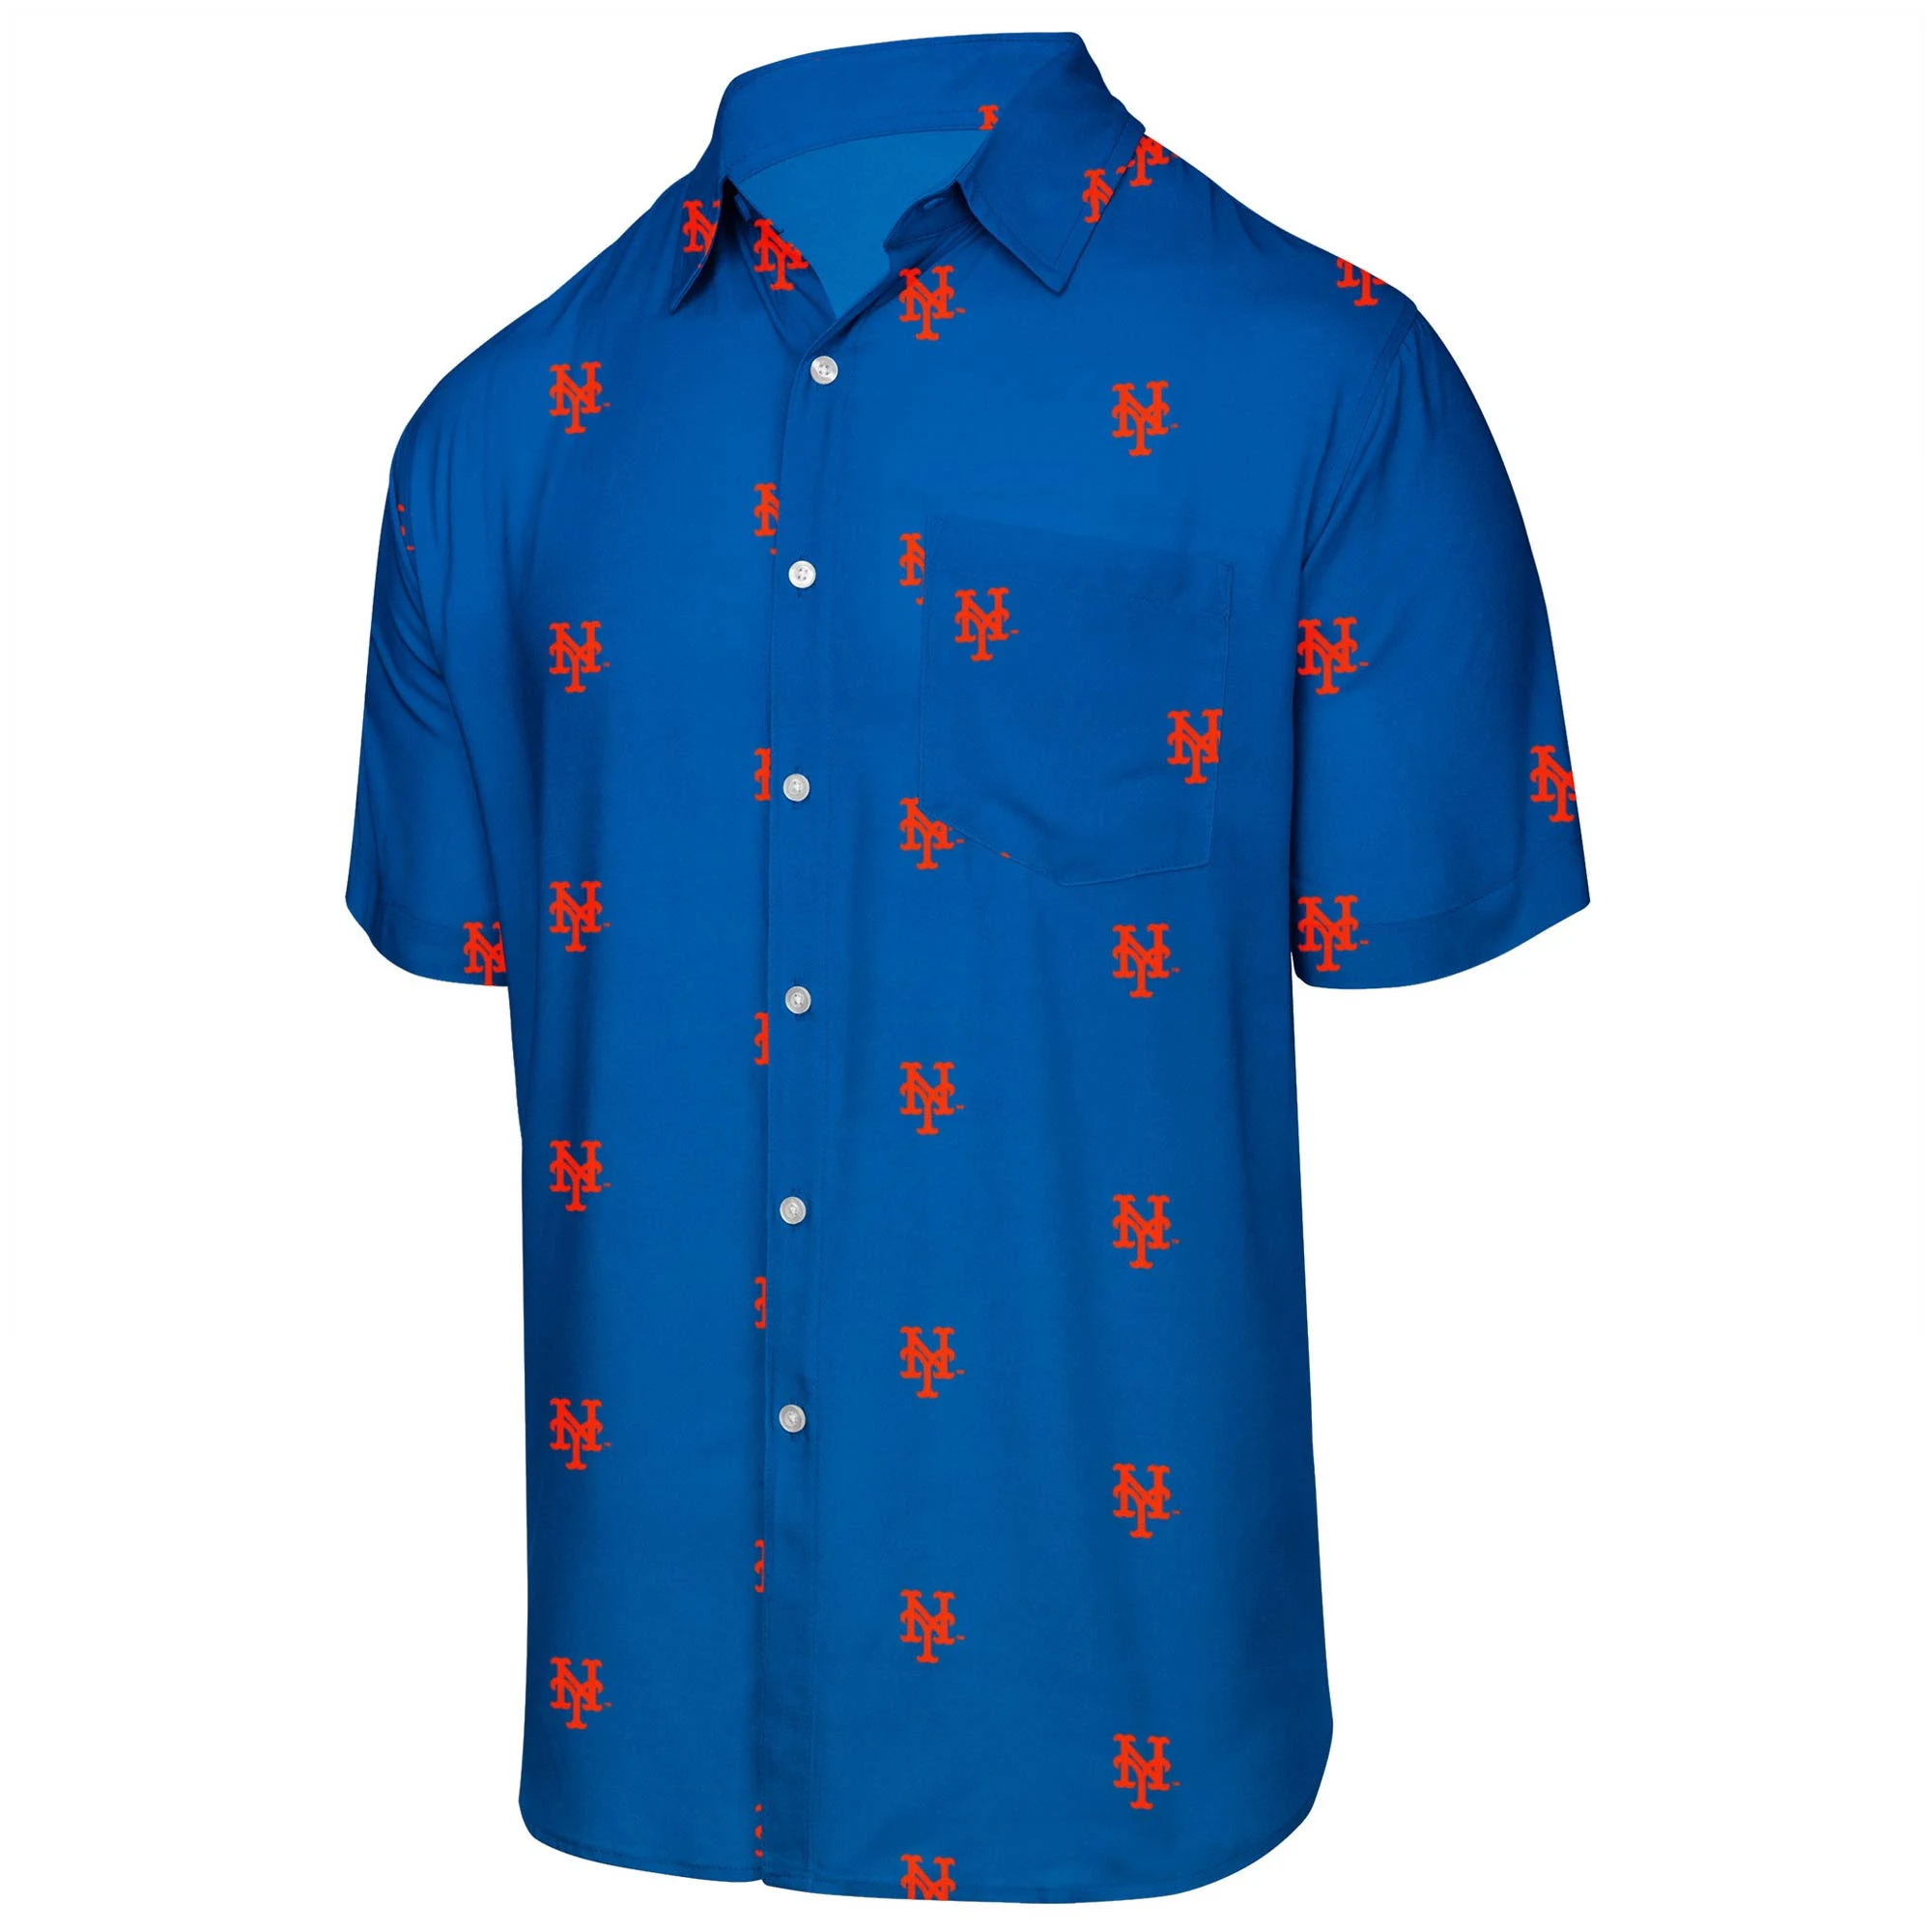 Vintage Mlb St Louis Cardinals Baseball Hawaiian Shirt - Bluecat